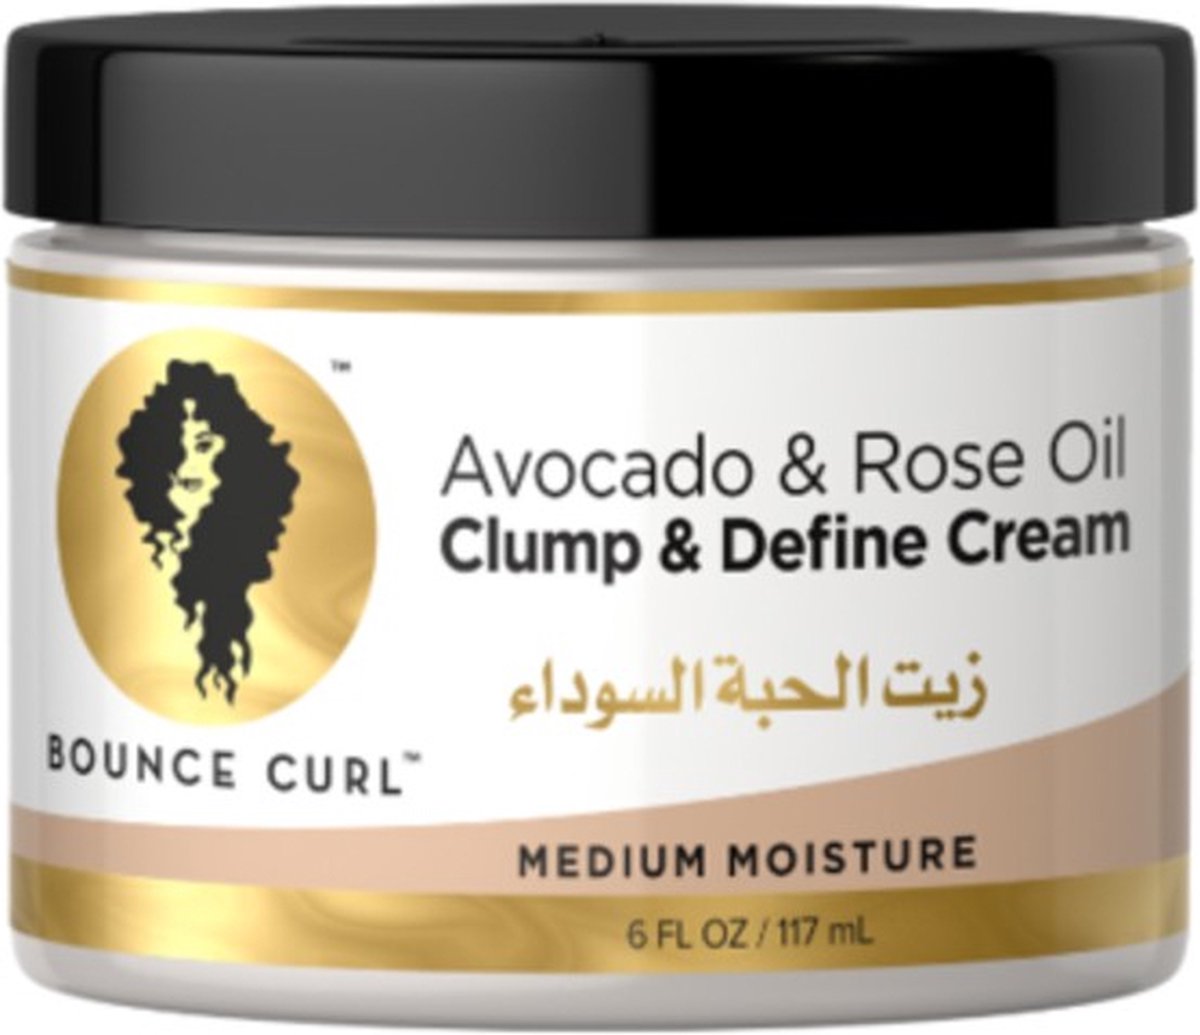 Bounce Curl Avocado & Rose oil Clump & Define Cream